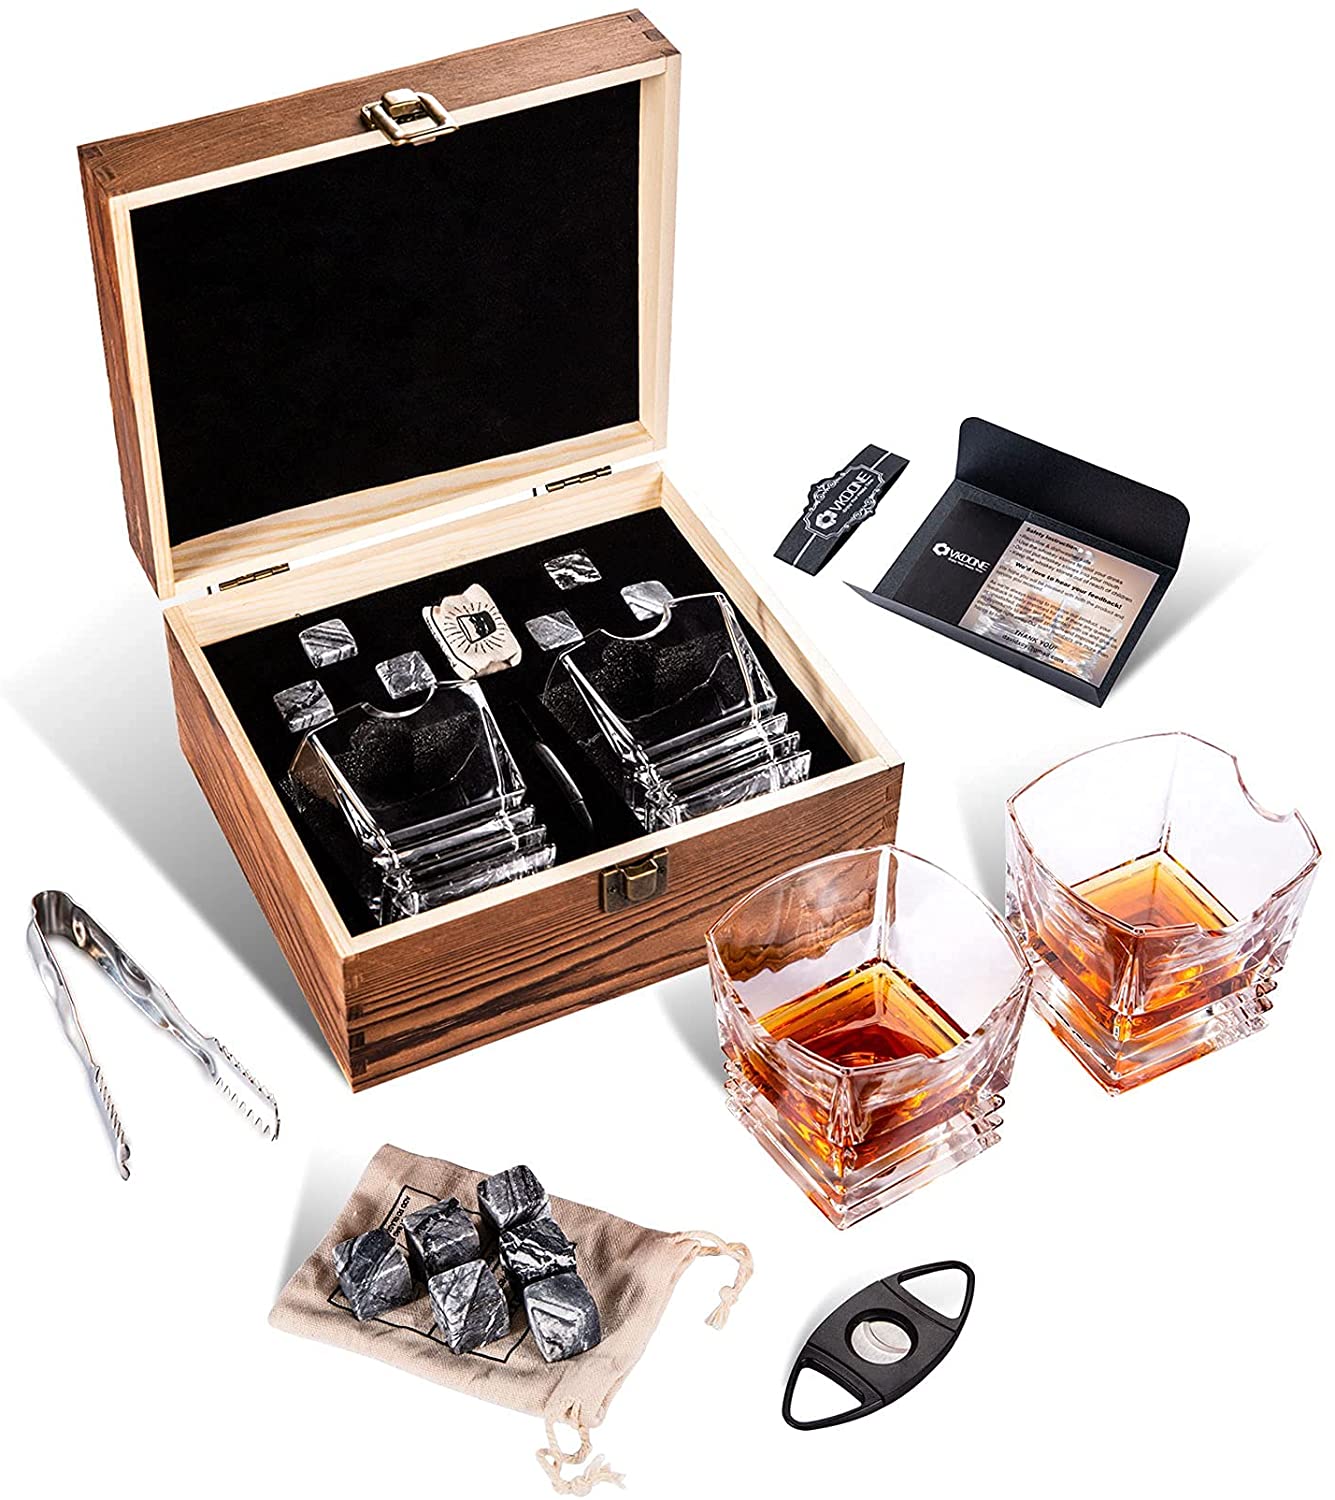 New Arrival China Barware Gift - Whiskey Glasses 10 oz With Holder Grey Whiskey Stones Chilling Rocks in Wooden Gift Box  – Shunstone